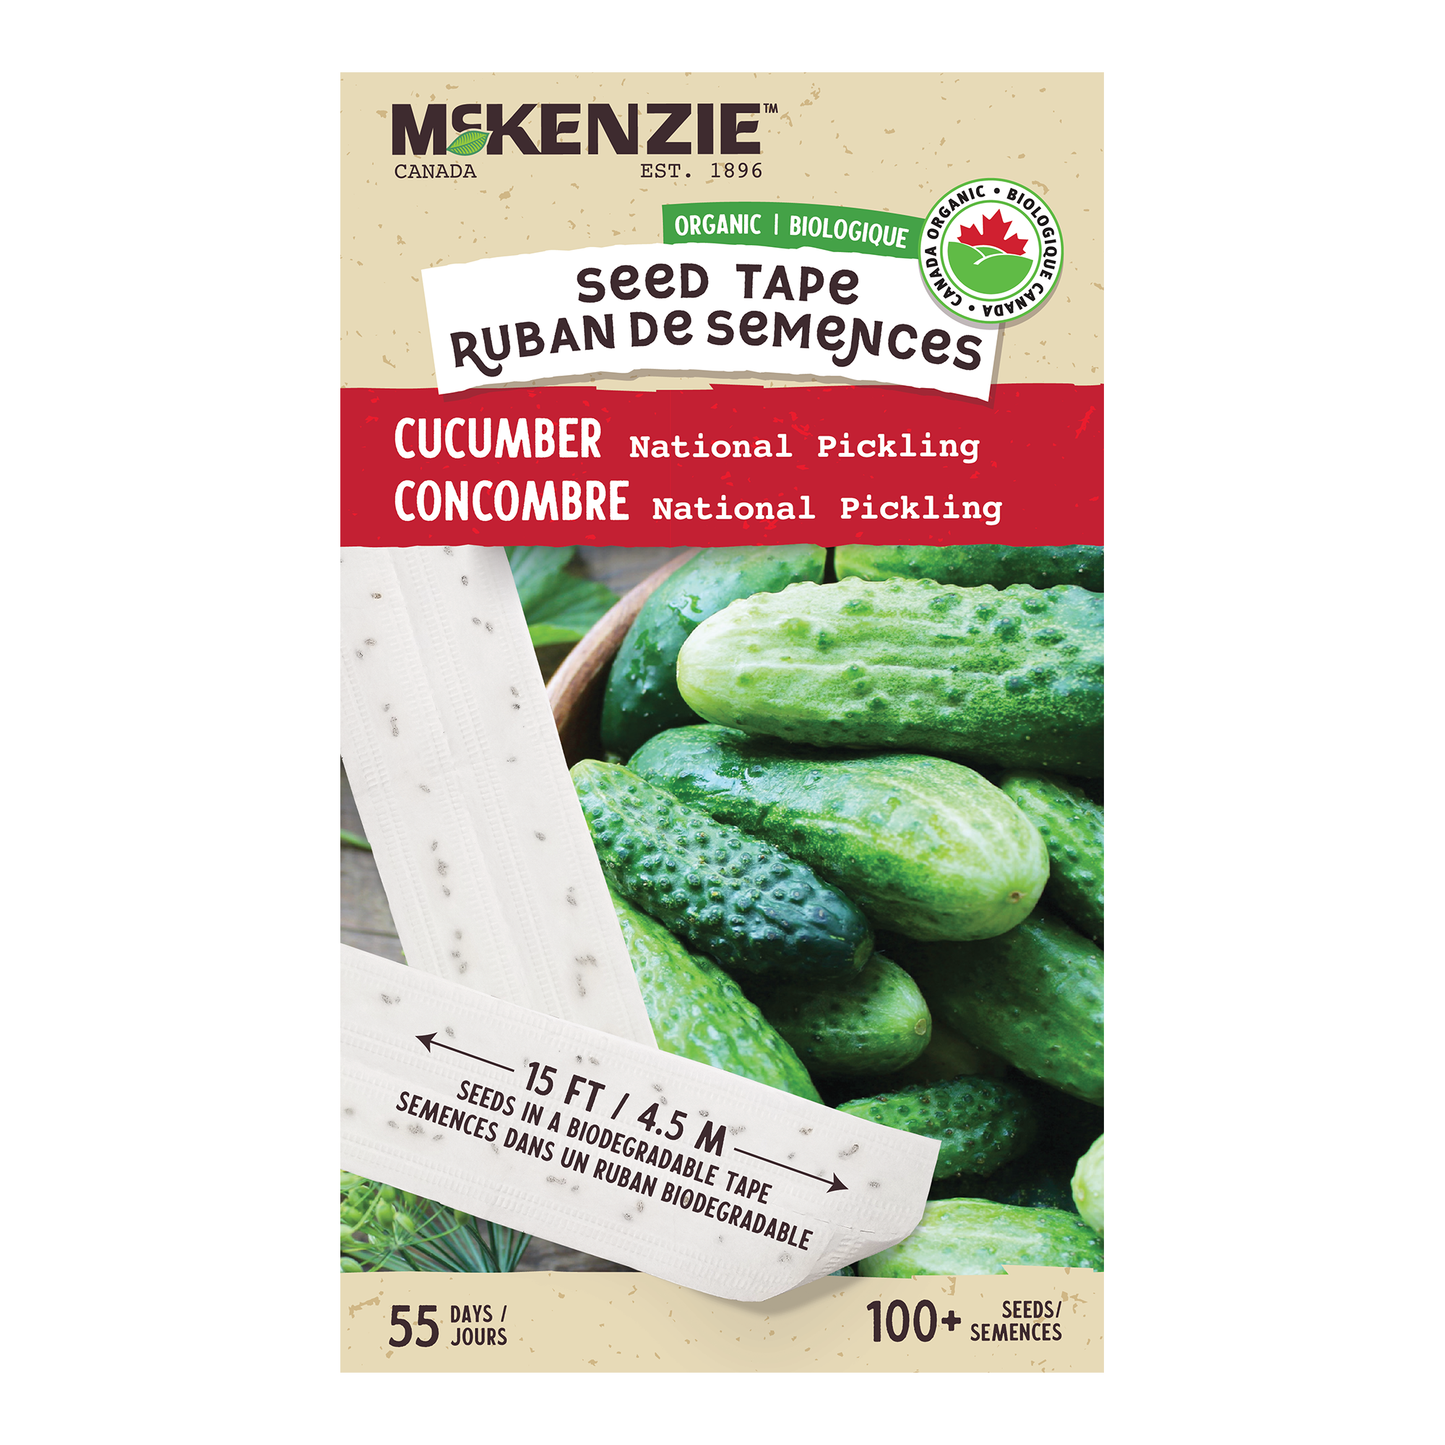 Organic Cucumber Seed Tape, National Pickling